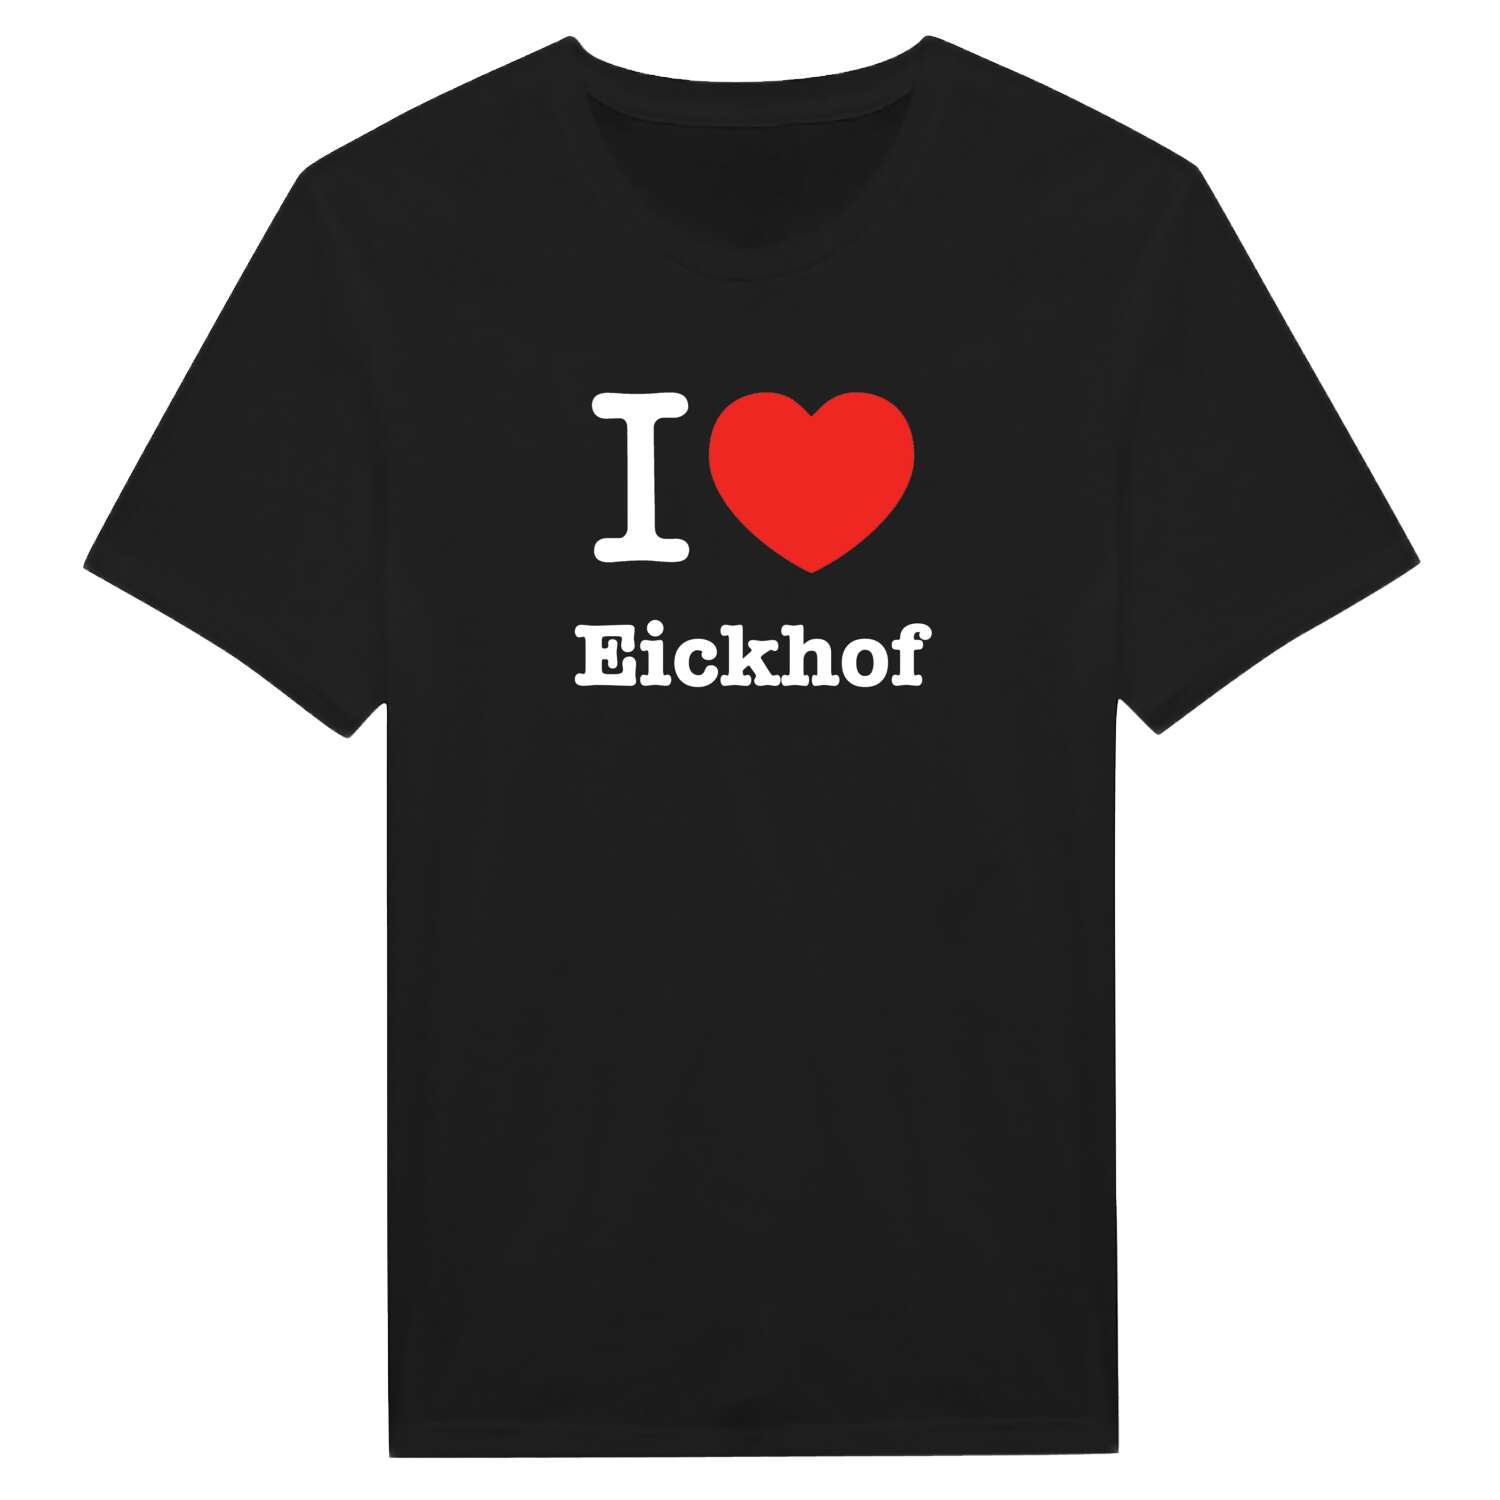 Eickhof T-Shirt »I love«